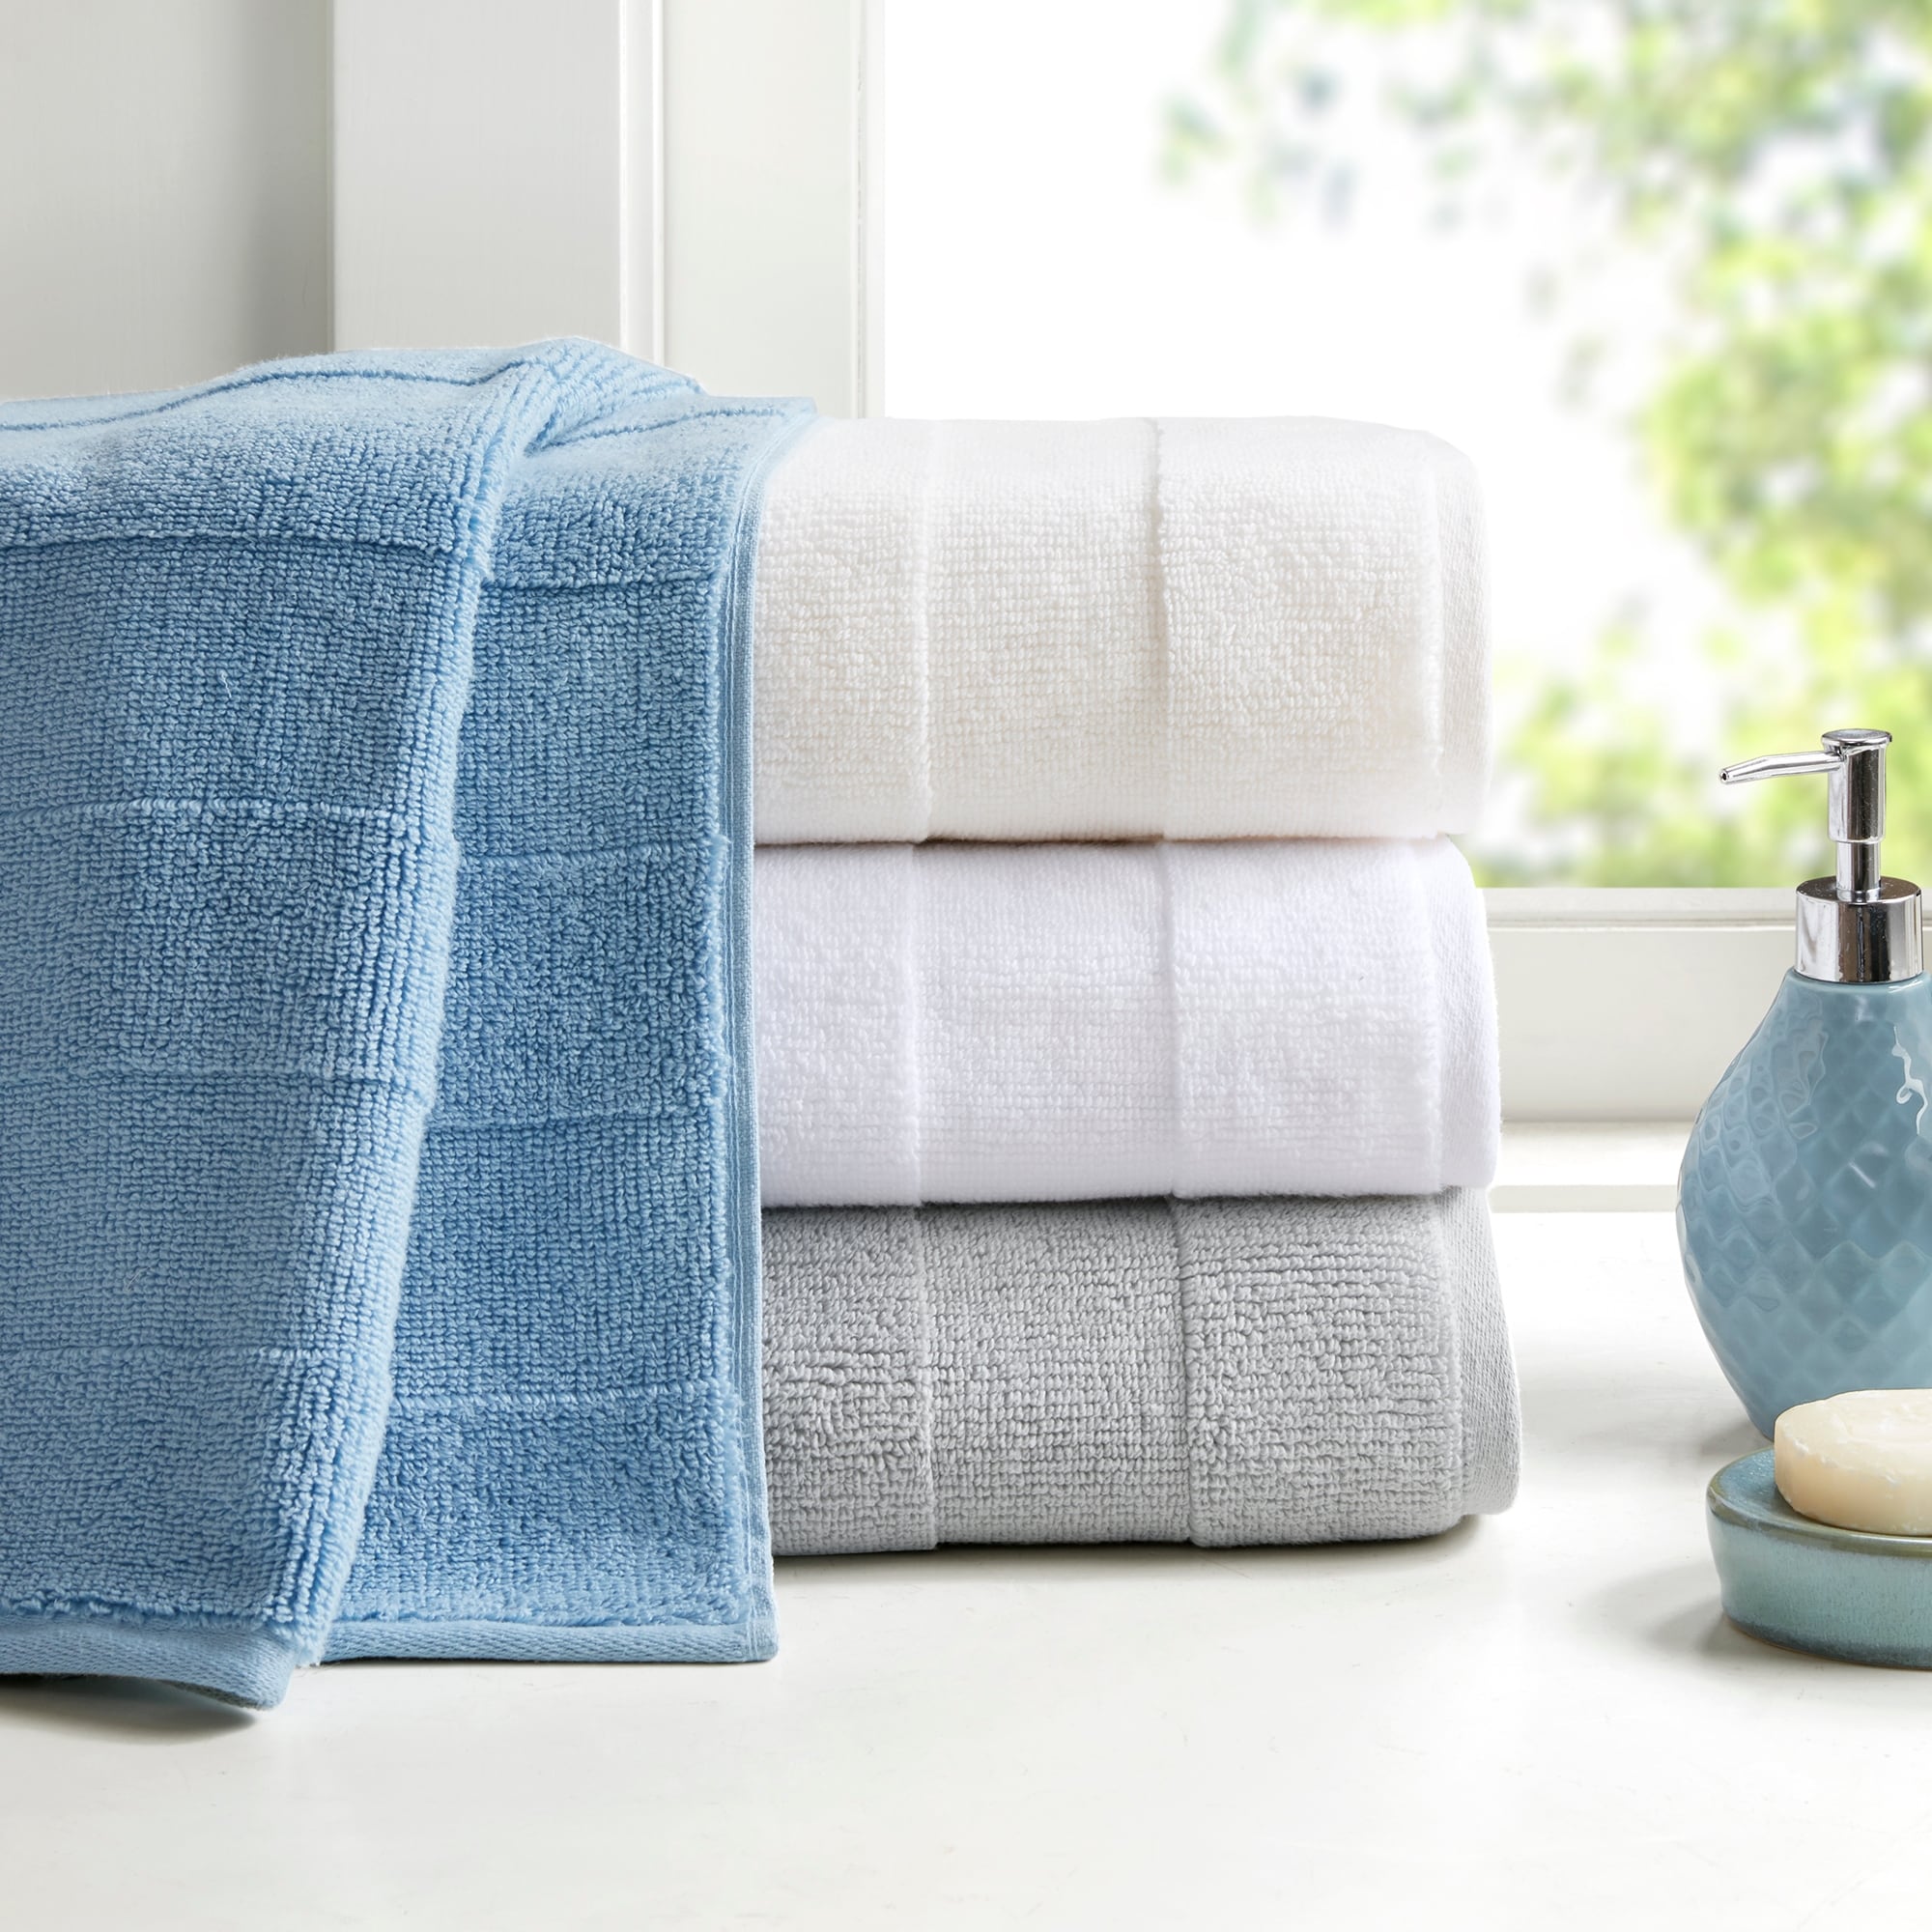 Simply Vera Vera Wang Textured Bath Towel Collection